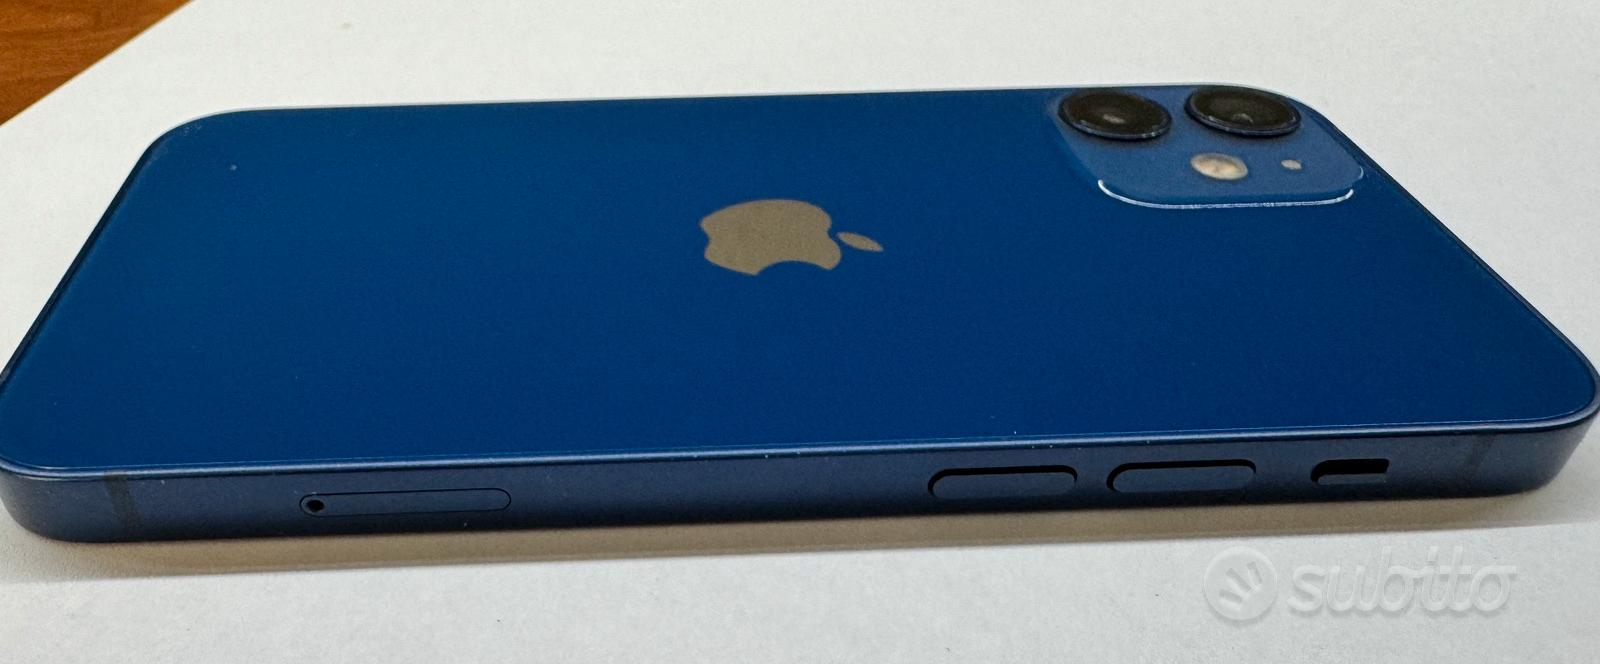 IPhone 12 mini blue 128 GB !!BATTERIA NUOVA!! - Telefonia In vendita a  Torino